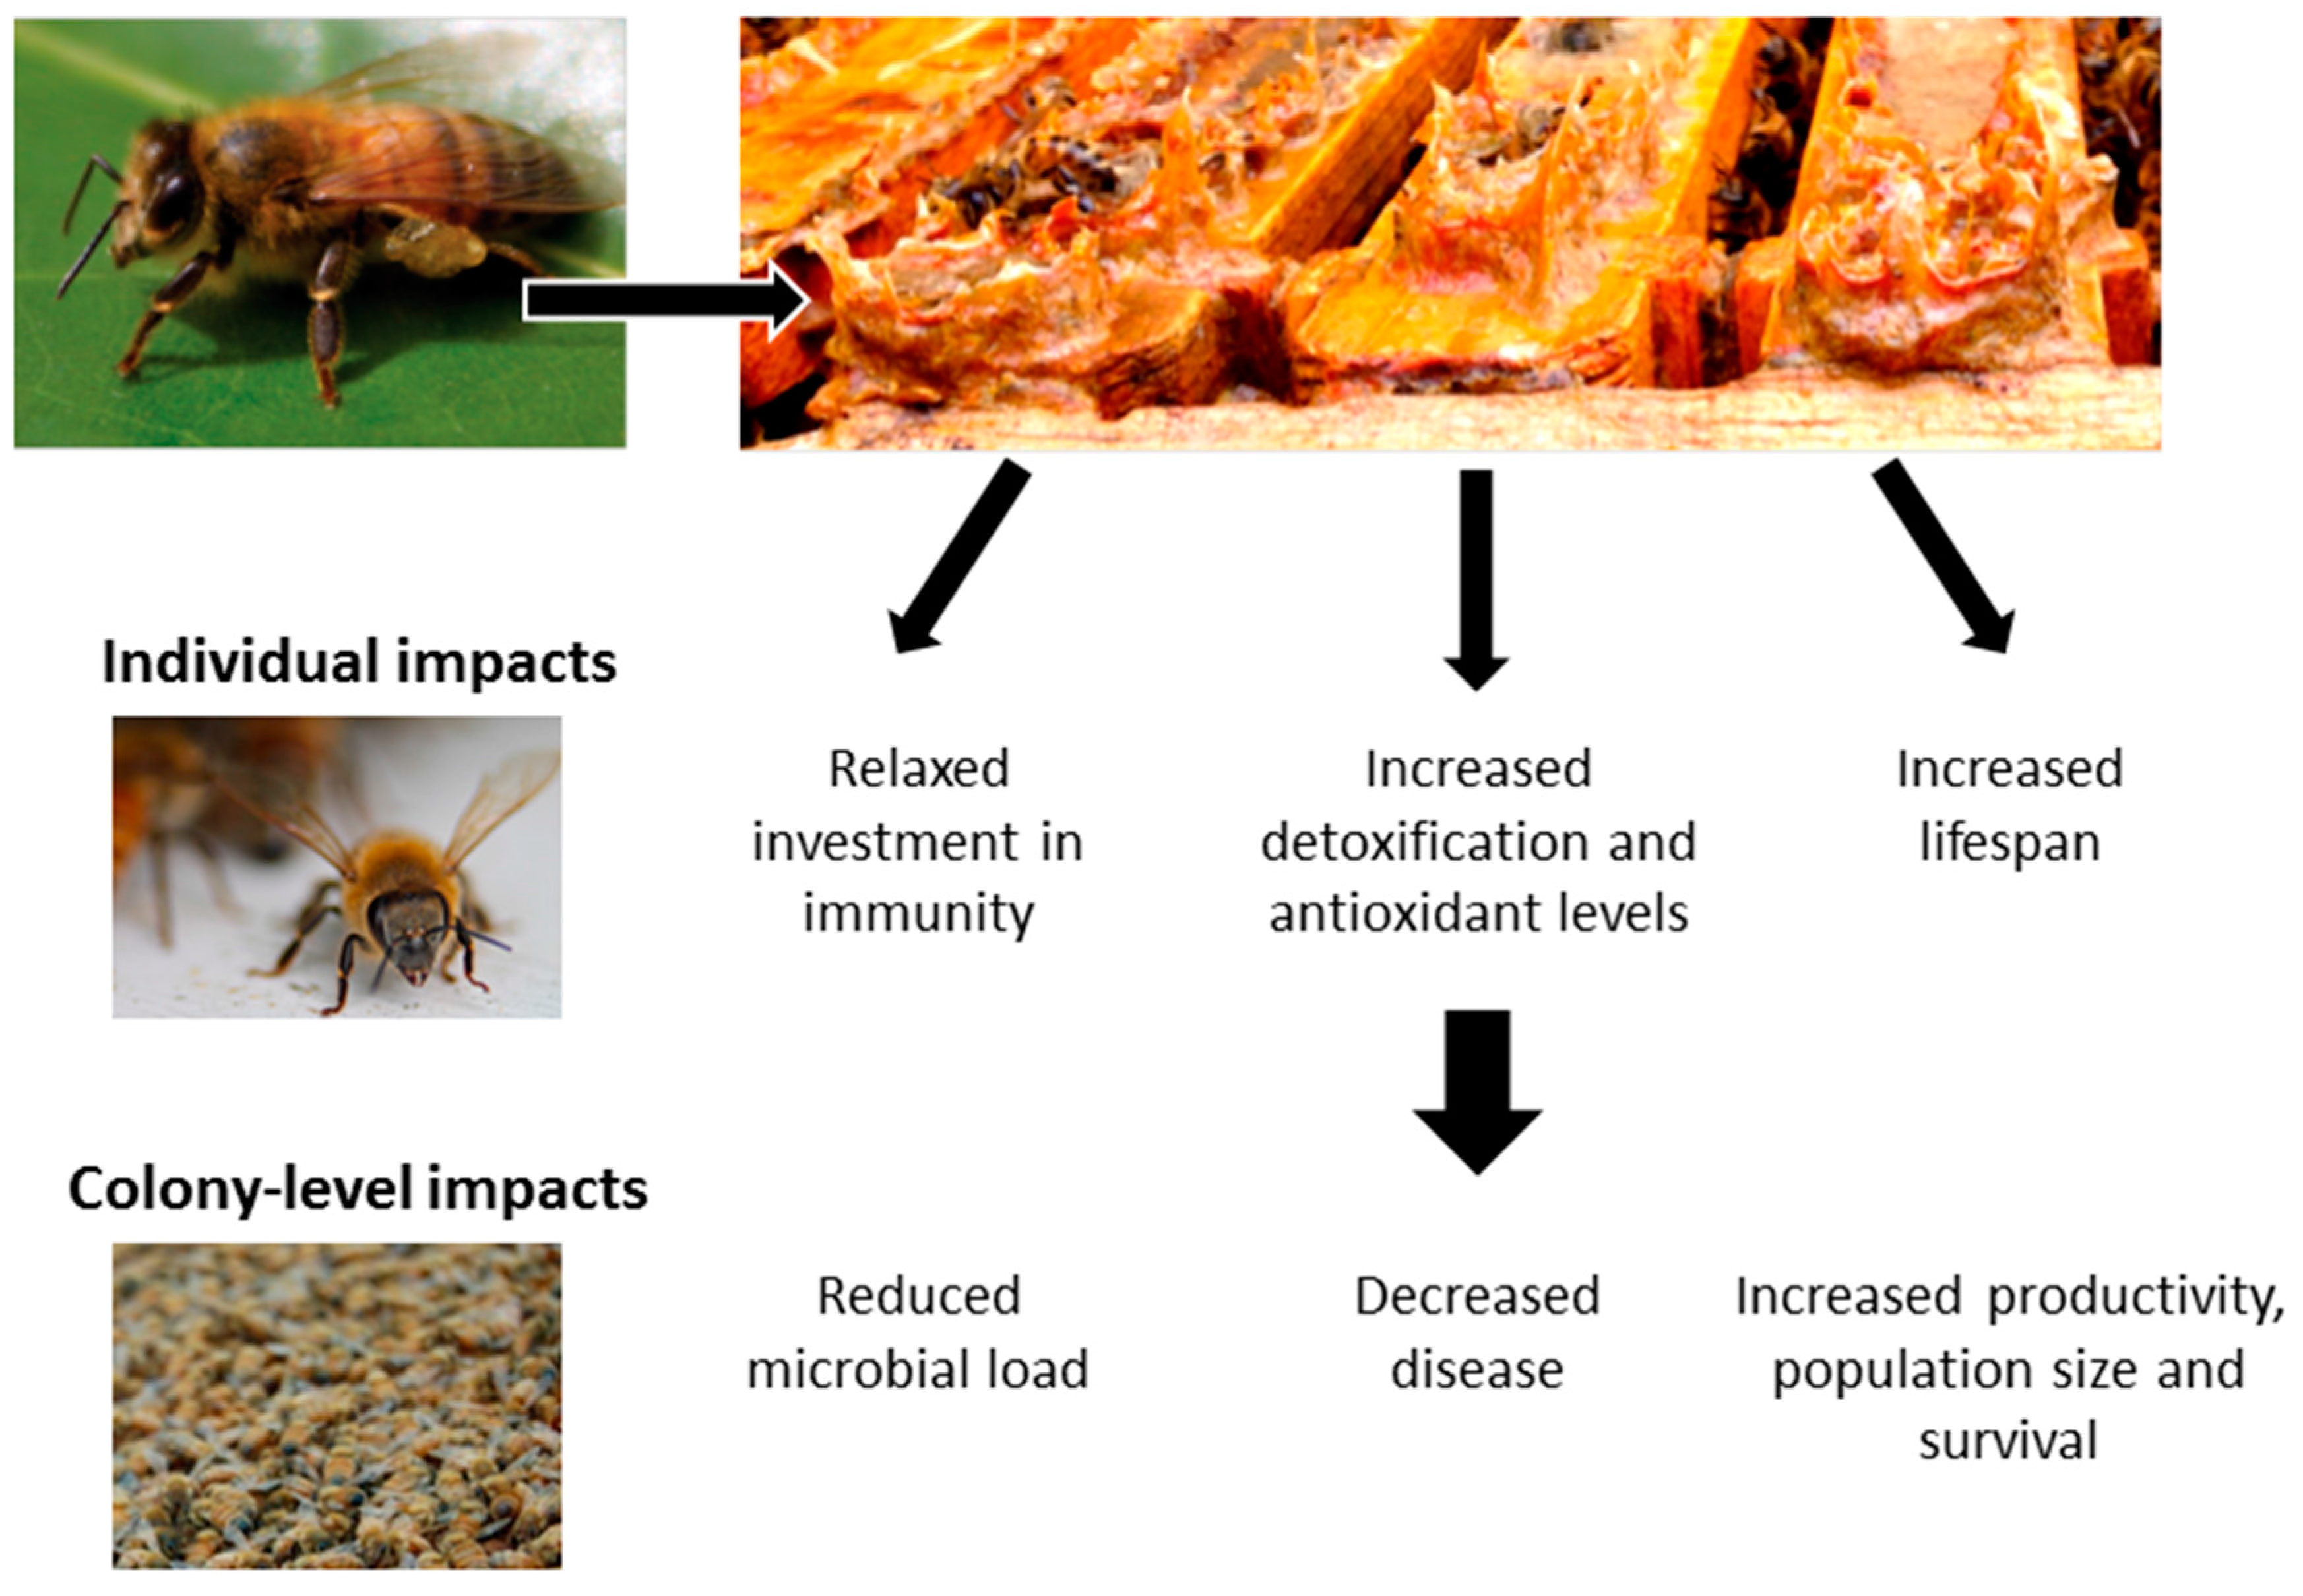 diseases of the honey bee